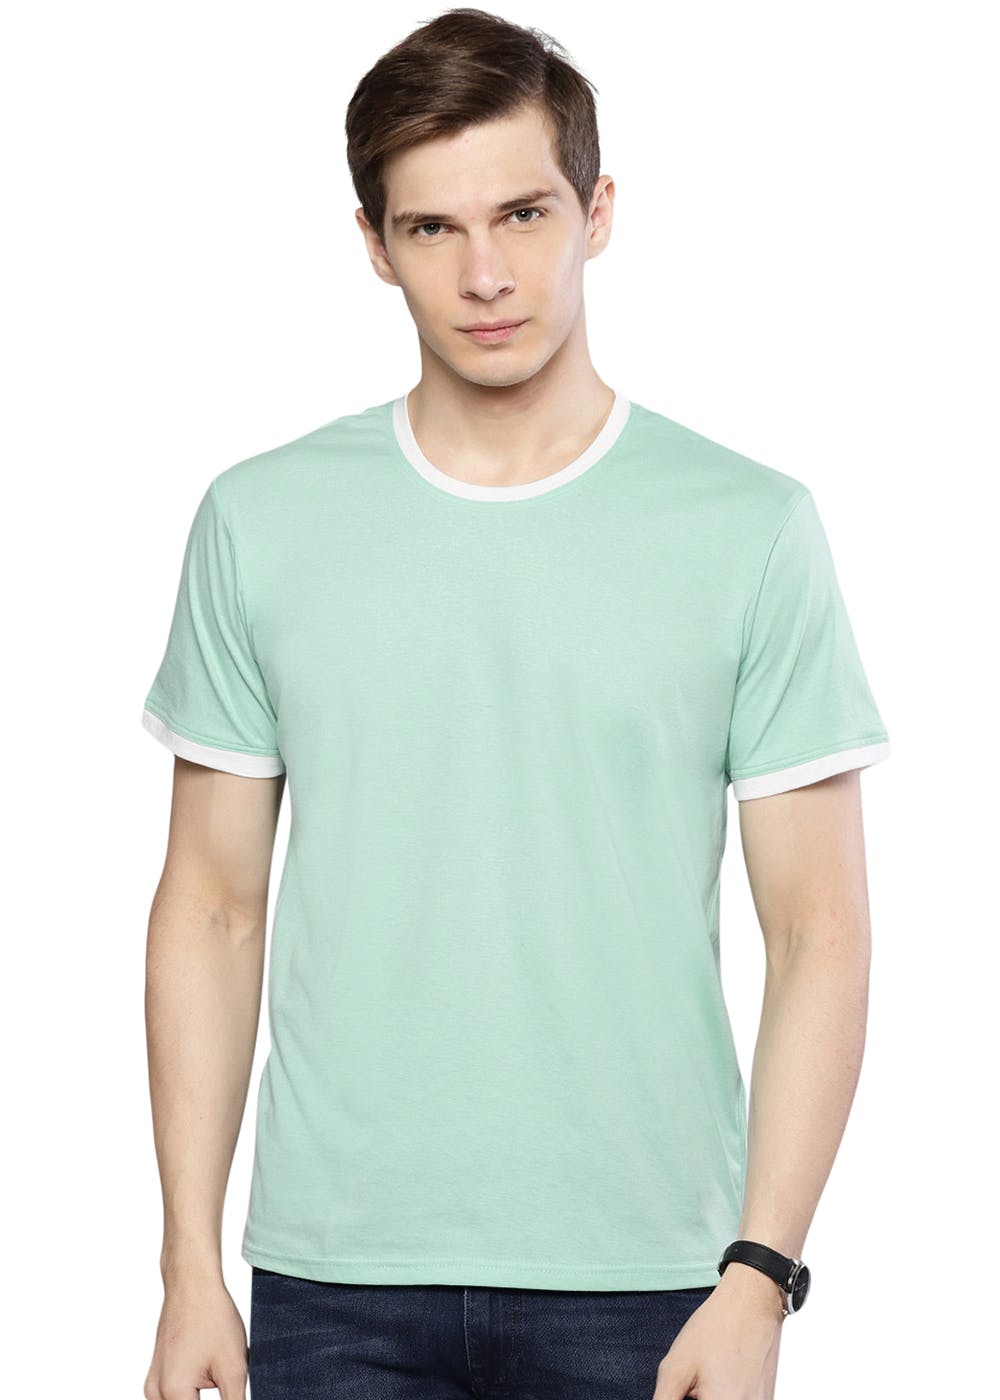 Contrast Trim Solid Half Sleeves T-Shirt